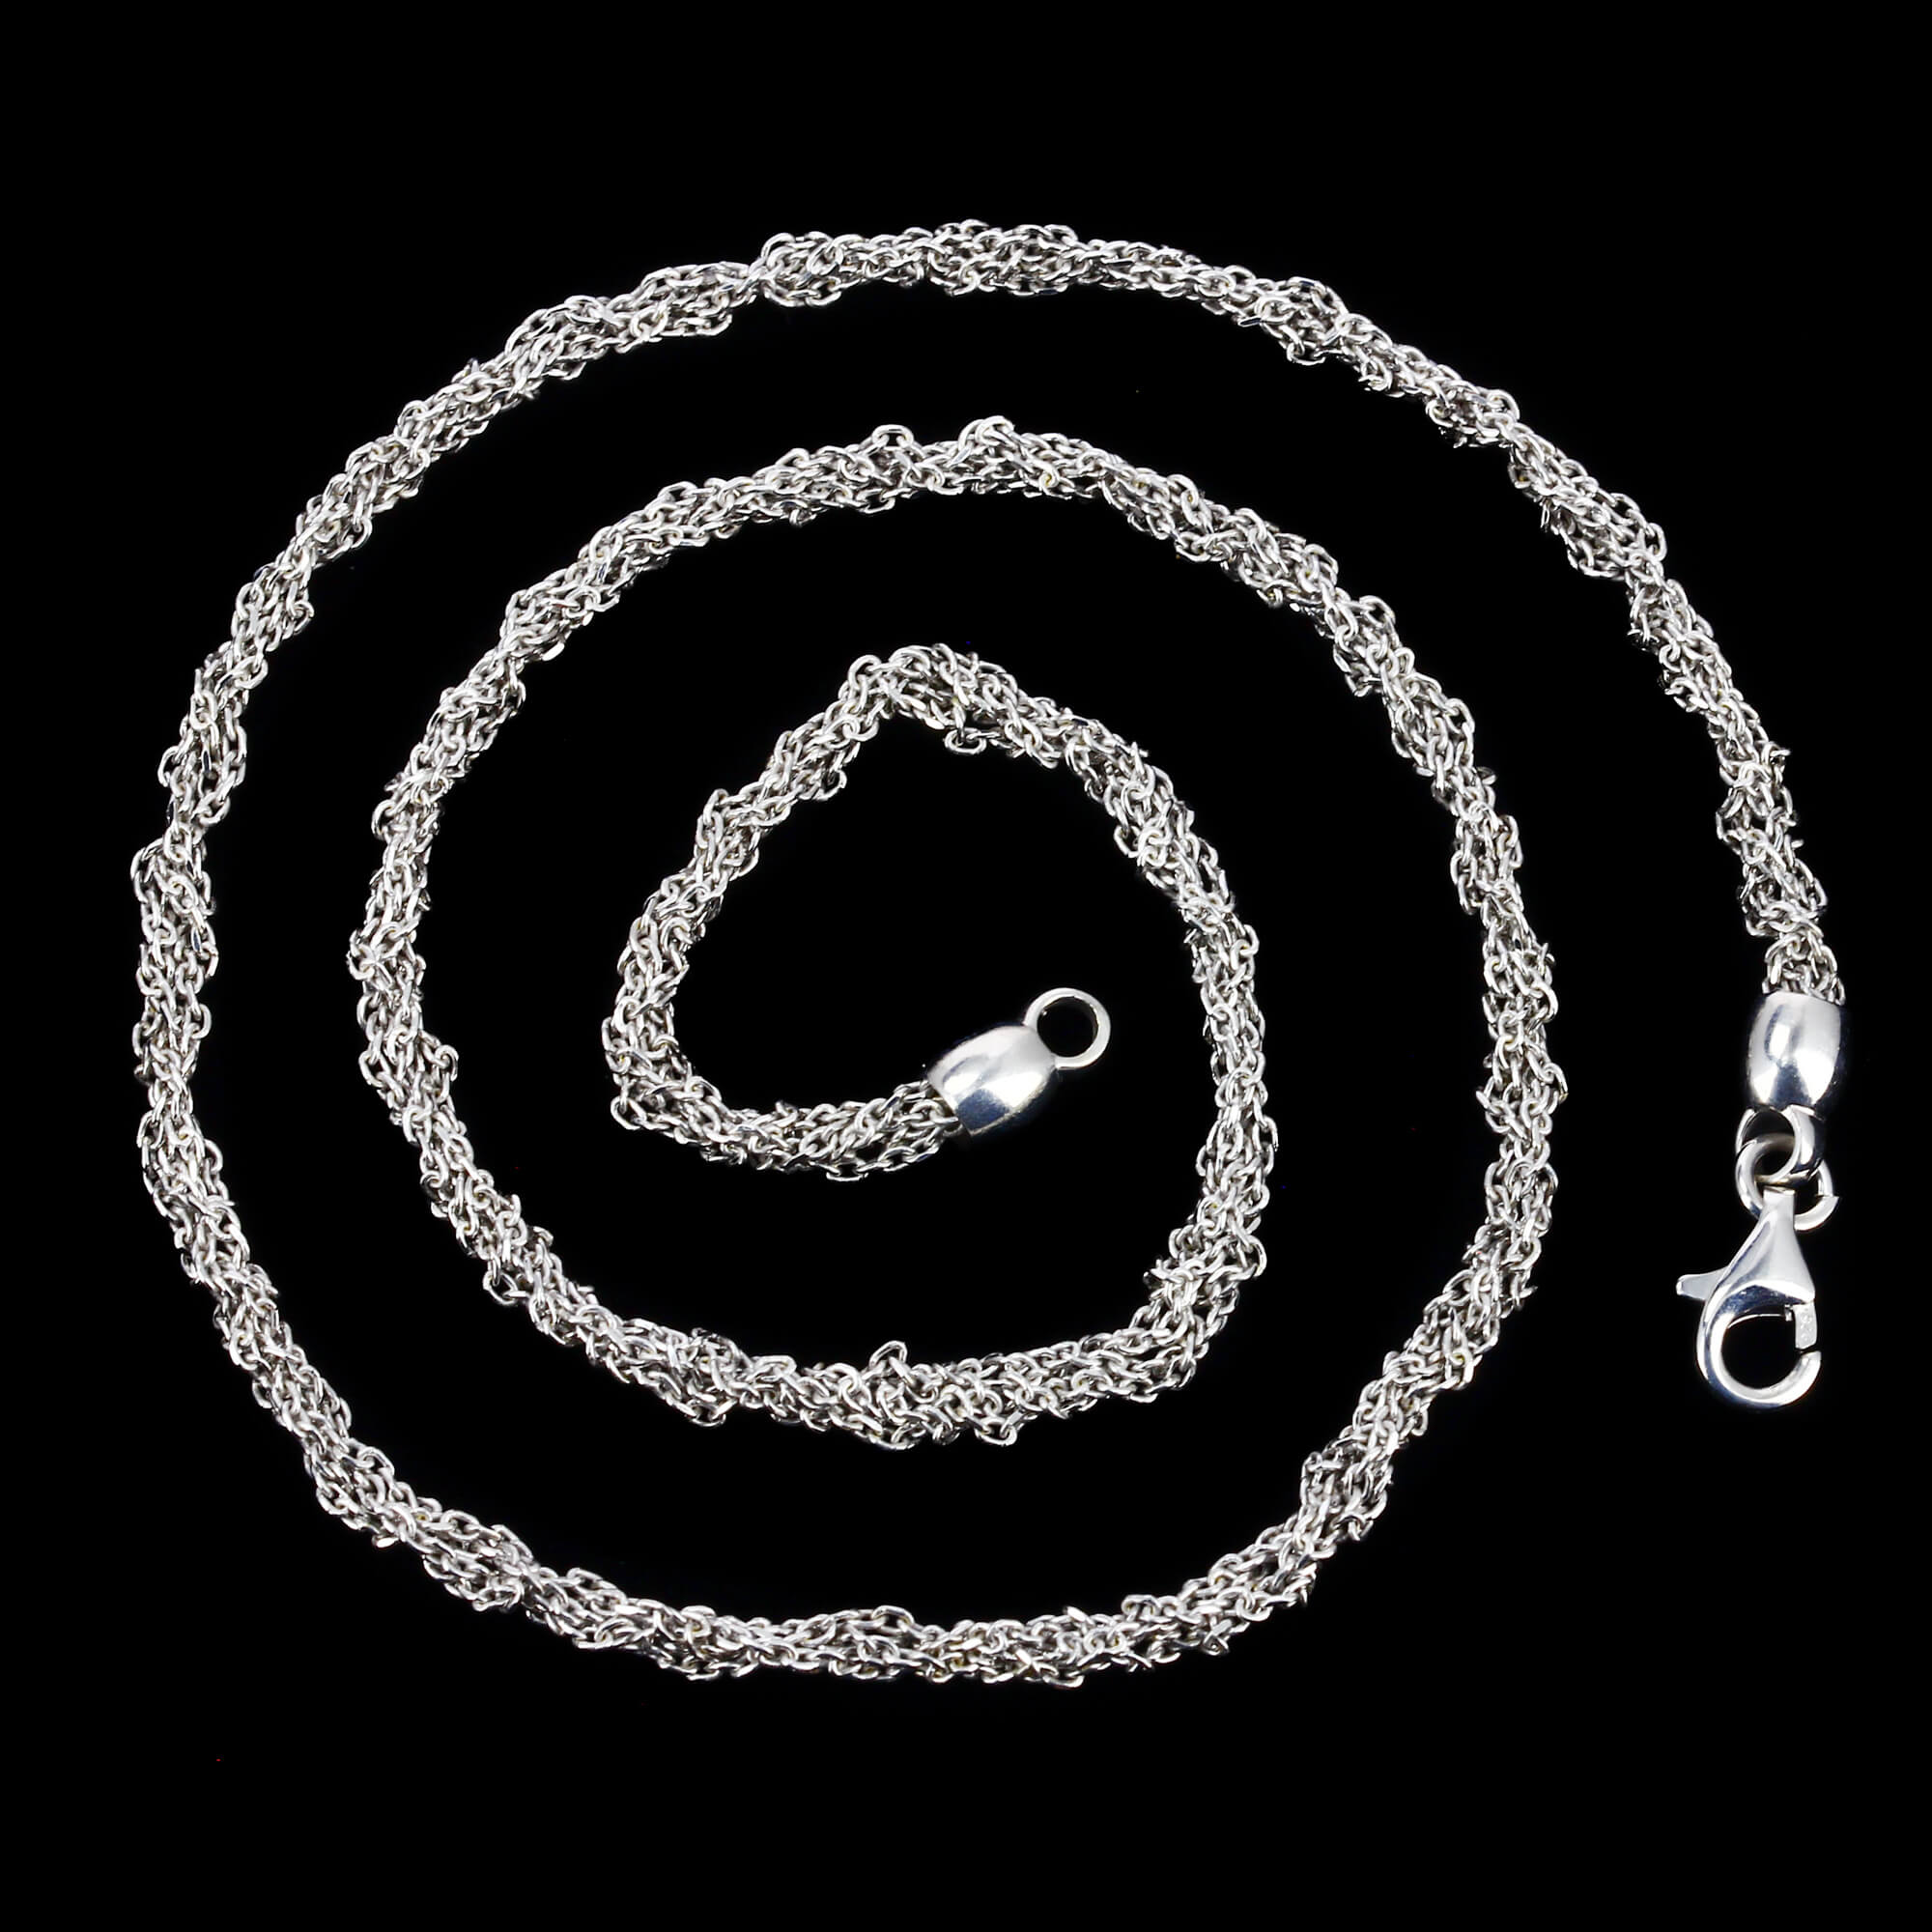 Short interwoven silver necklace